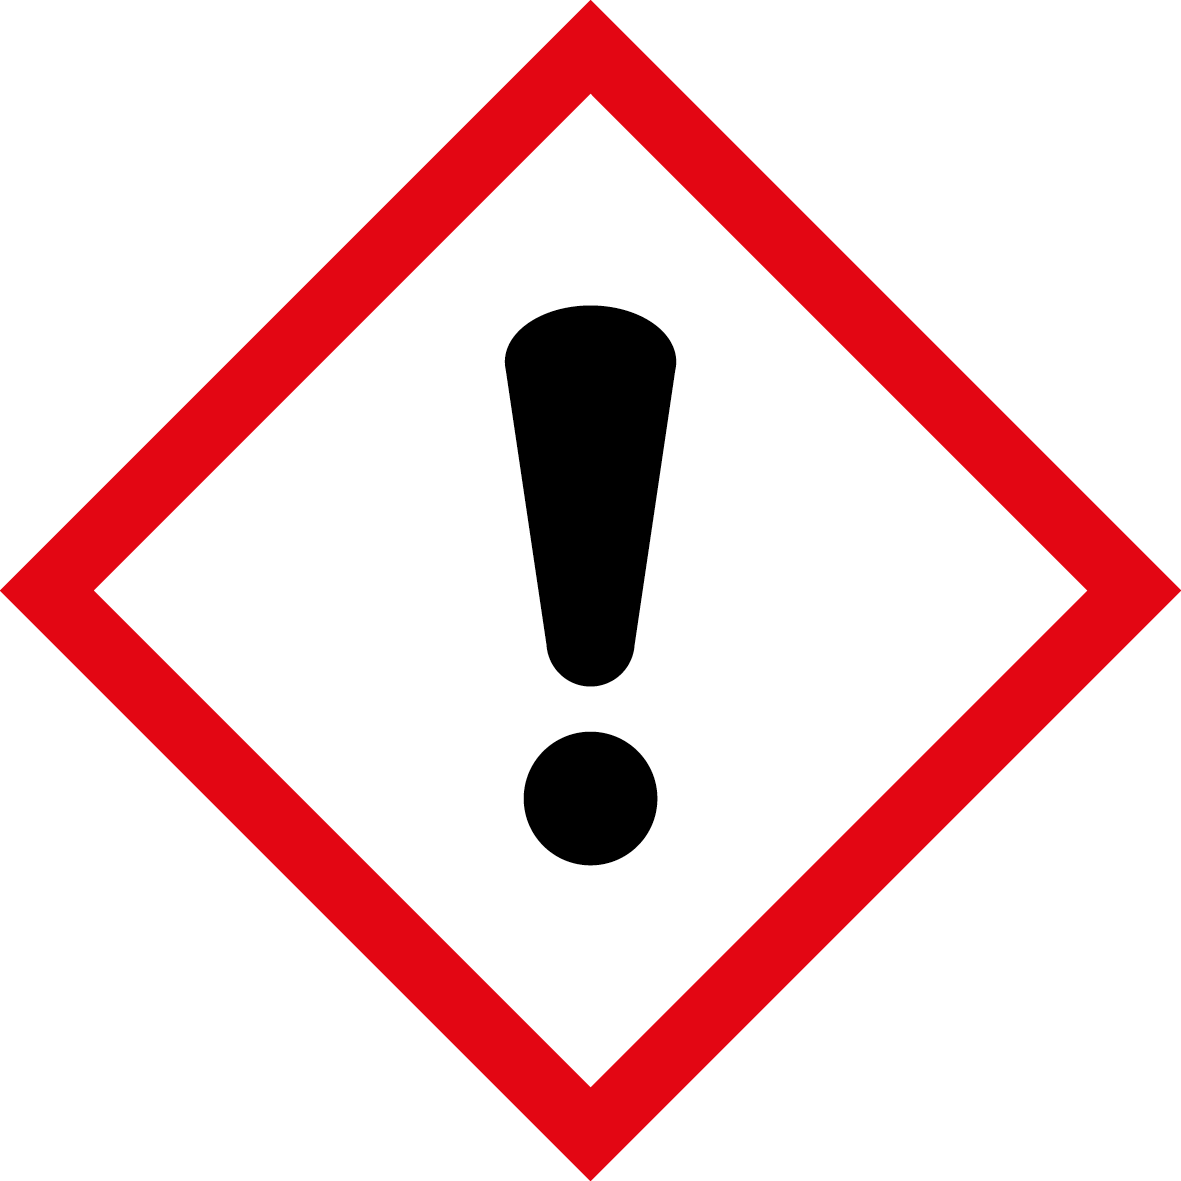 Danger pictogram Exclamation mark